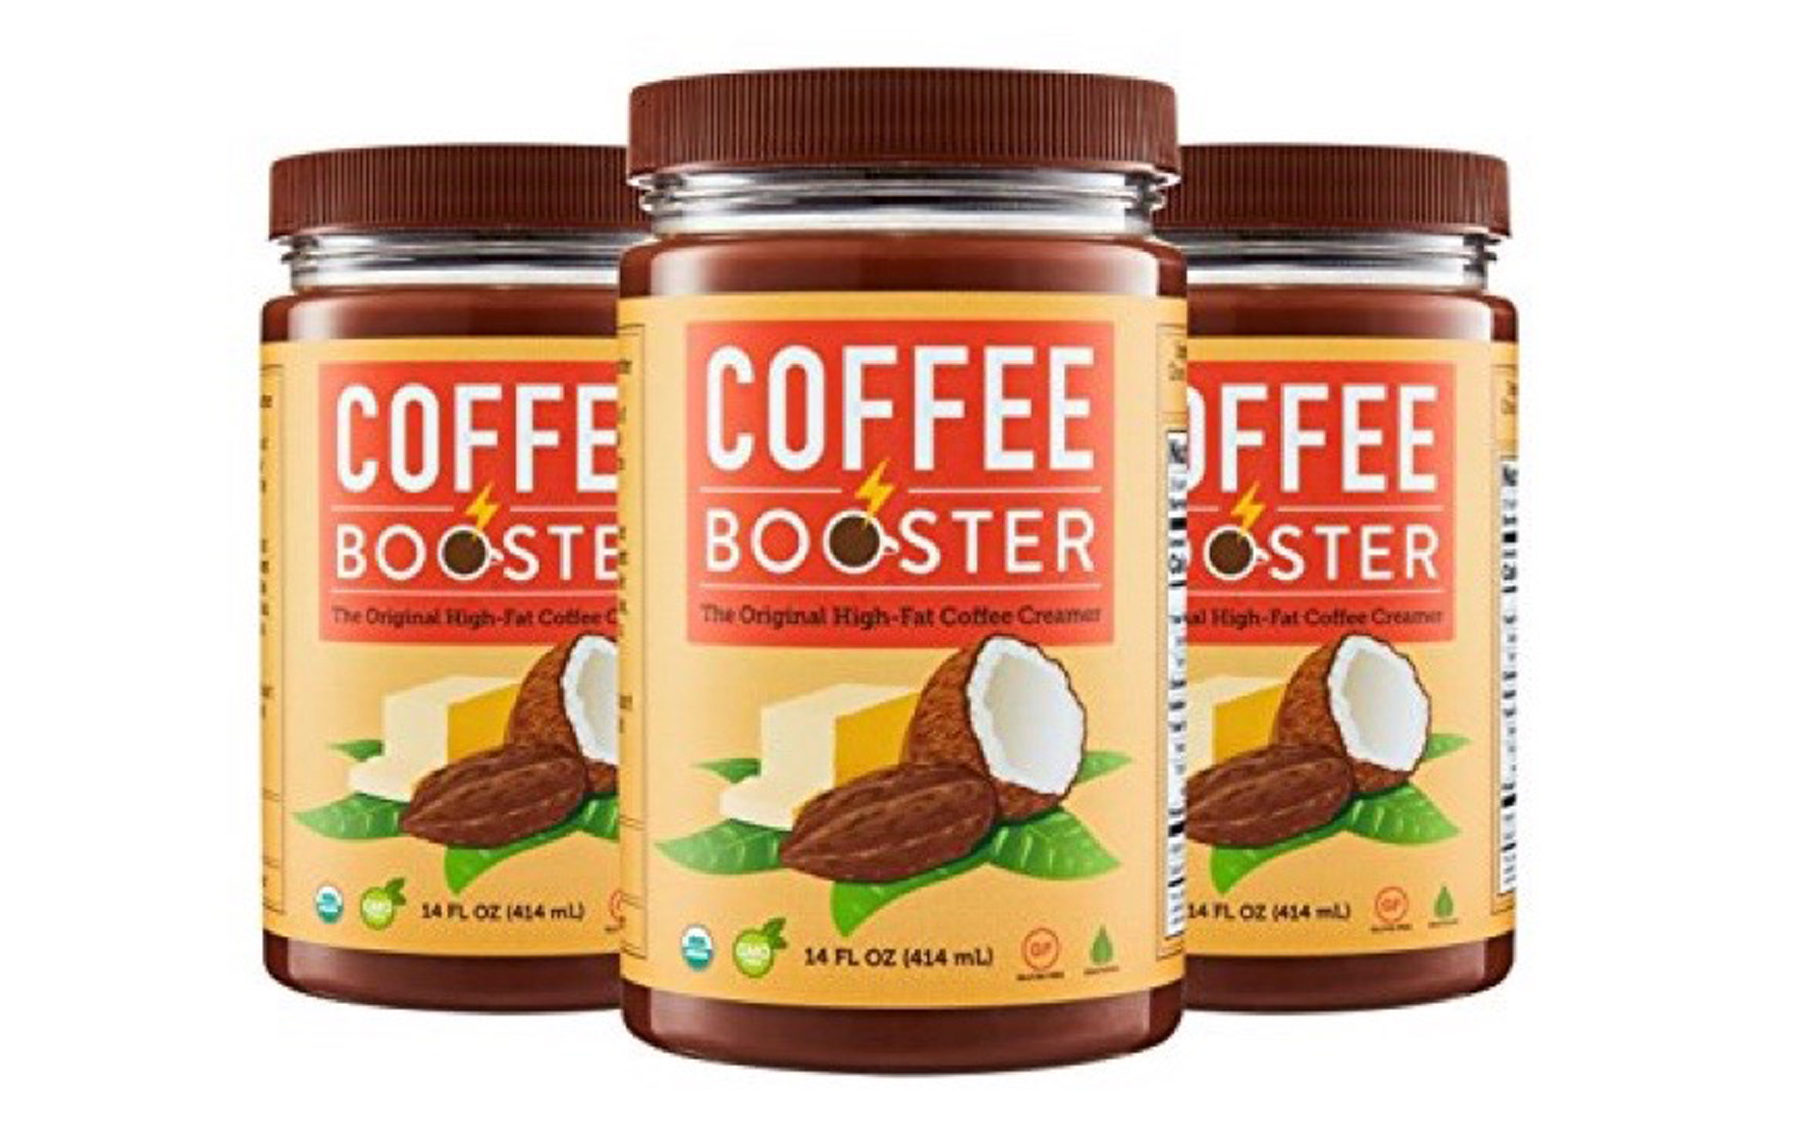 Coffee-Booster-on-Amazon-1-e1496969190331.jpg